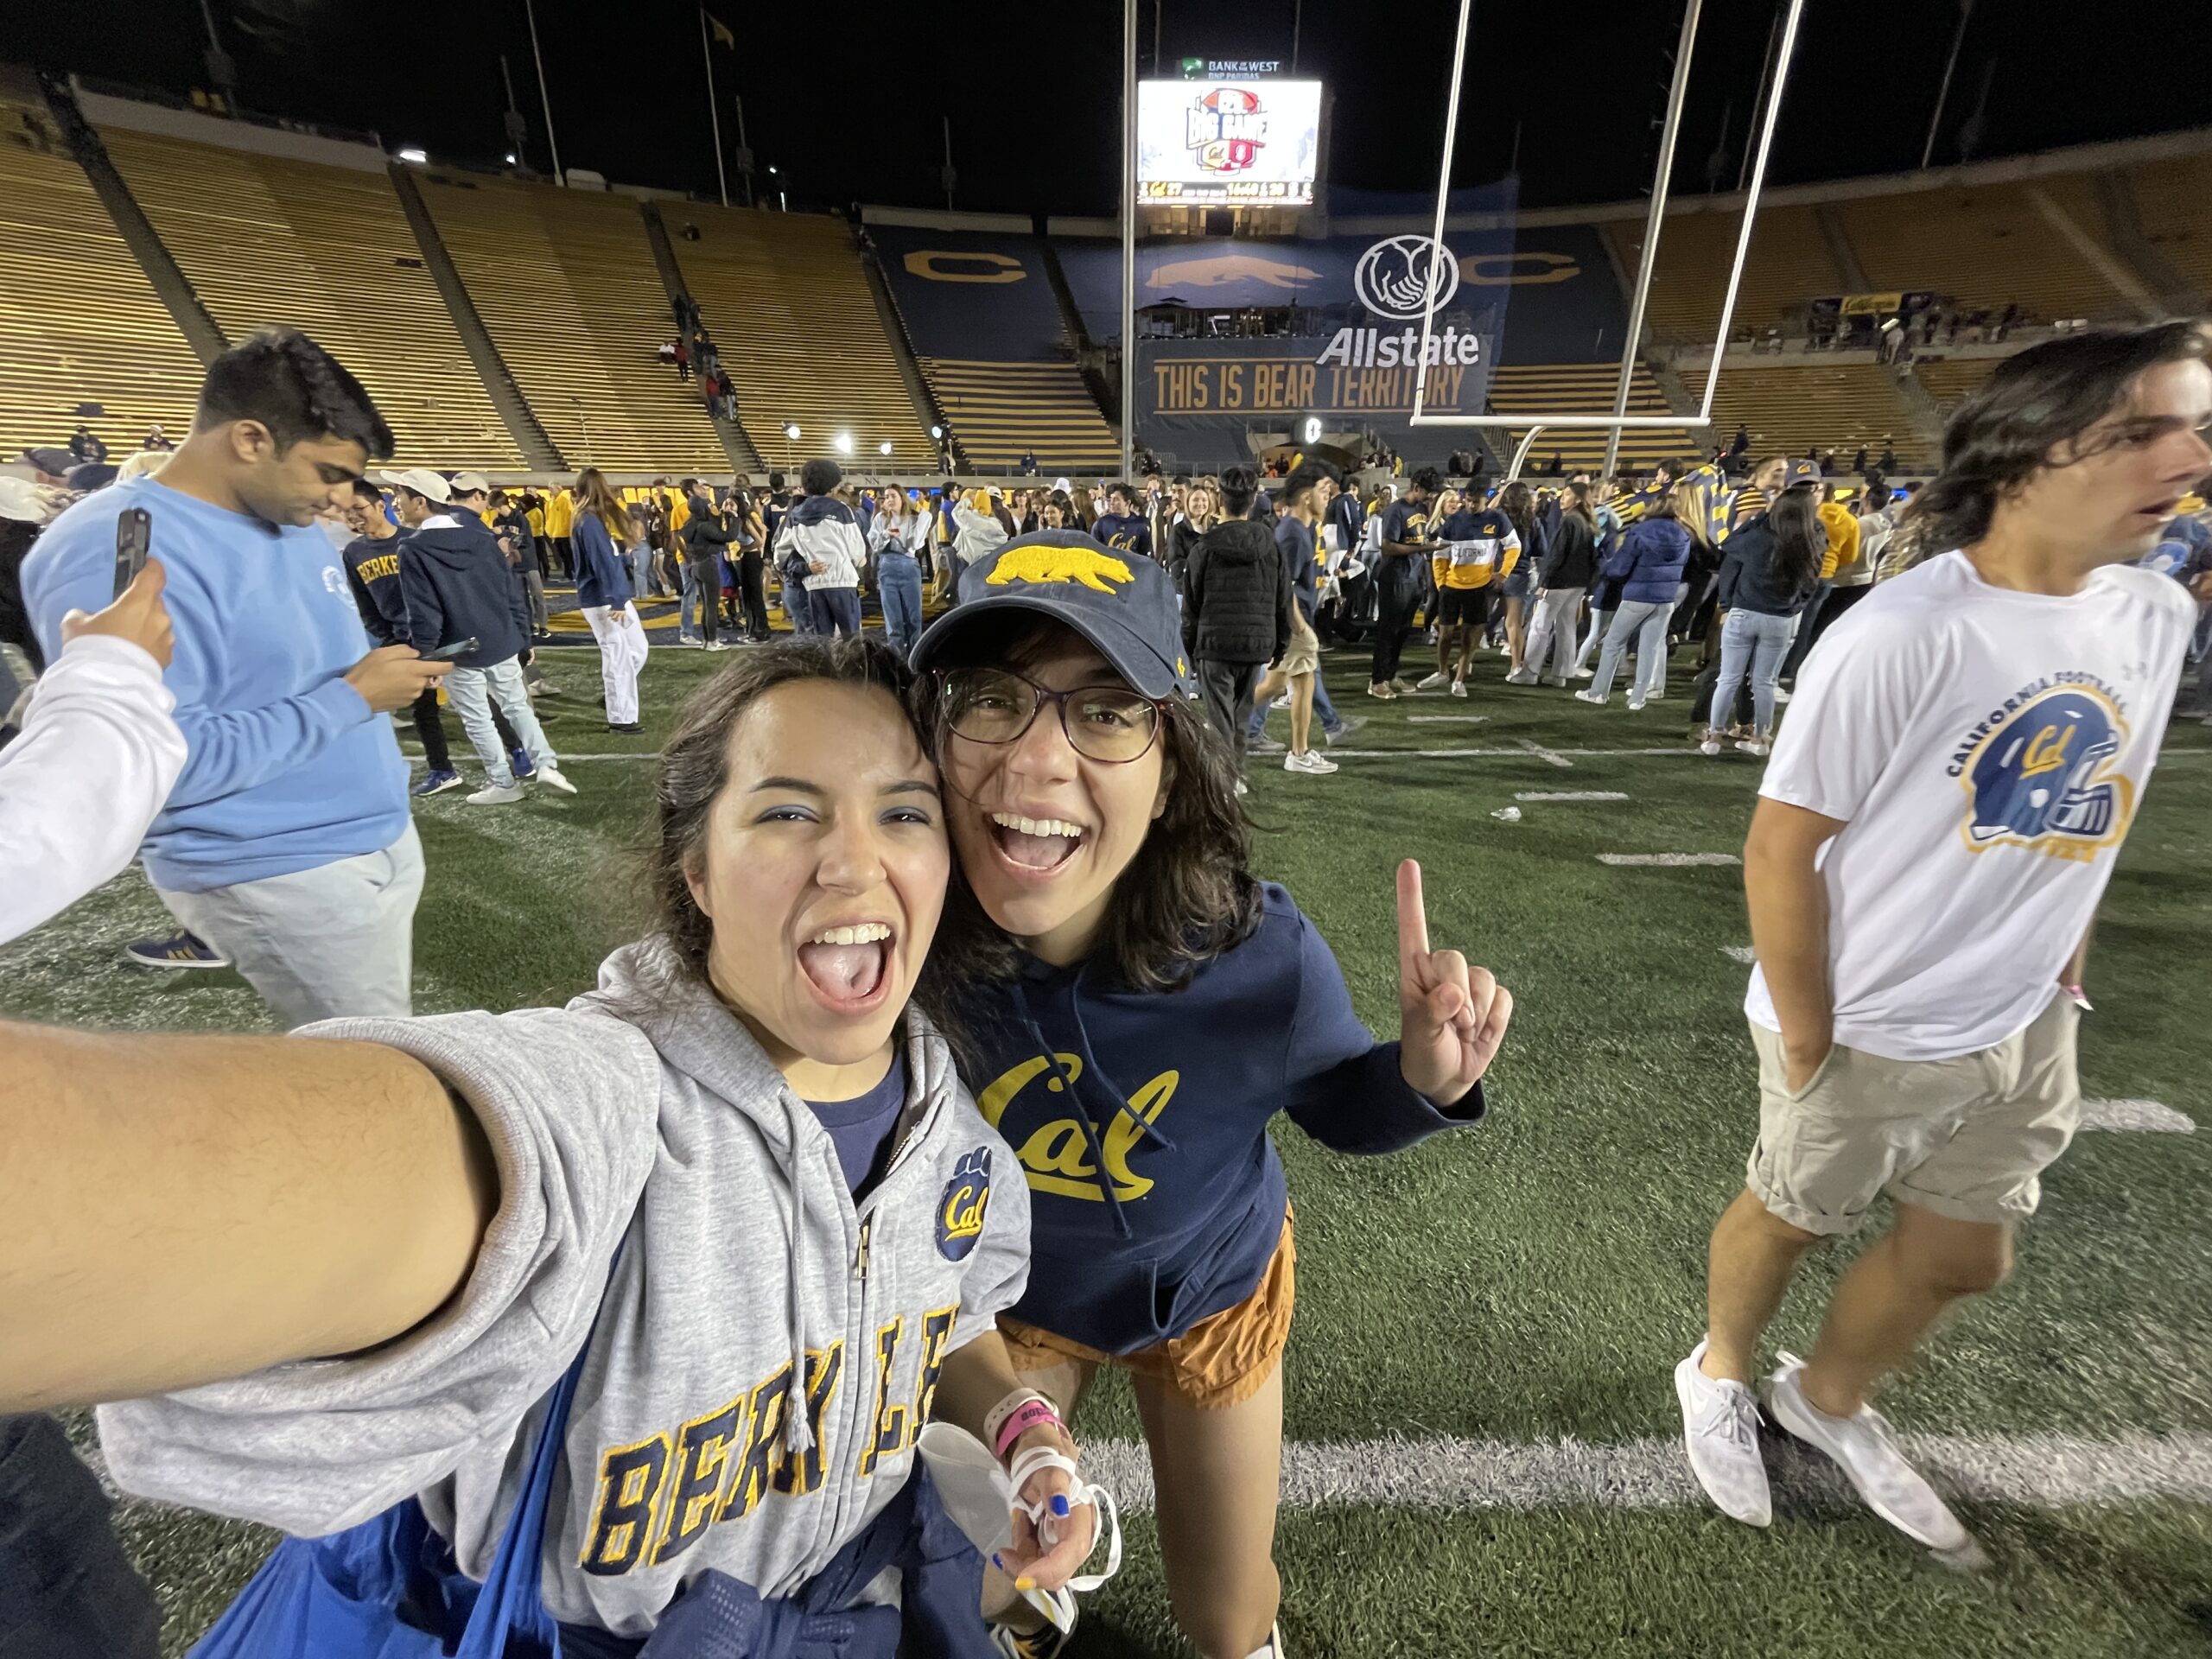 Recent graduates rocking school spirit at a Cal football game.